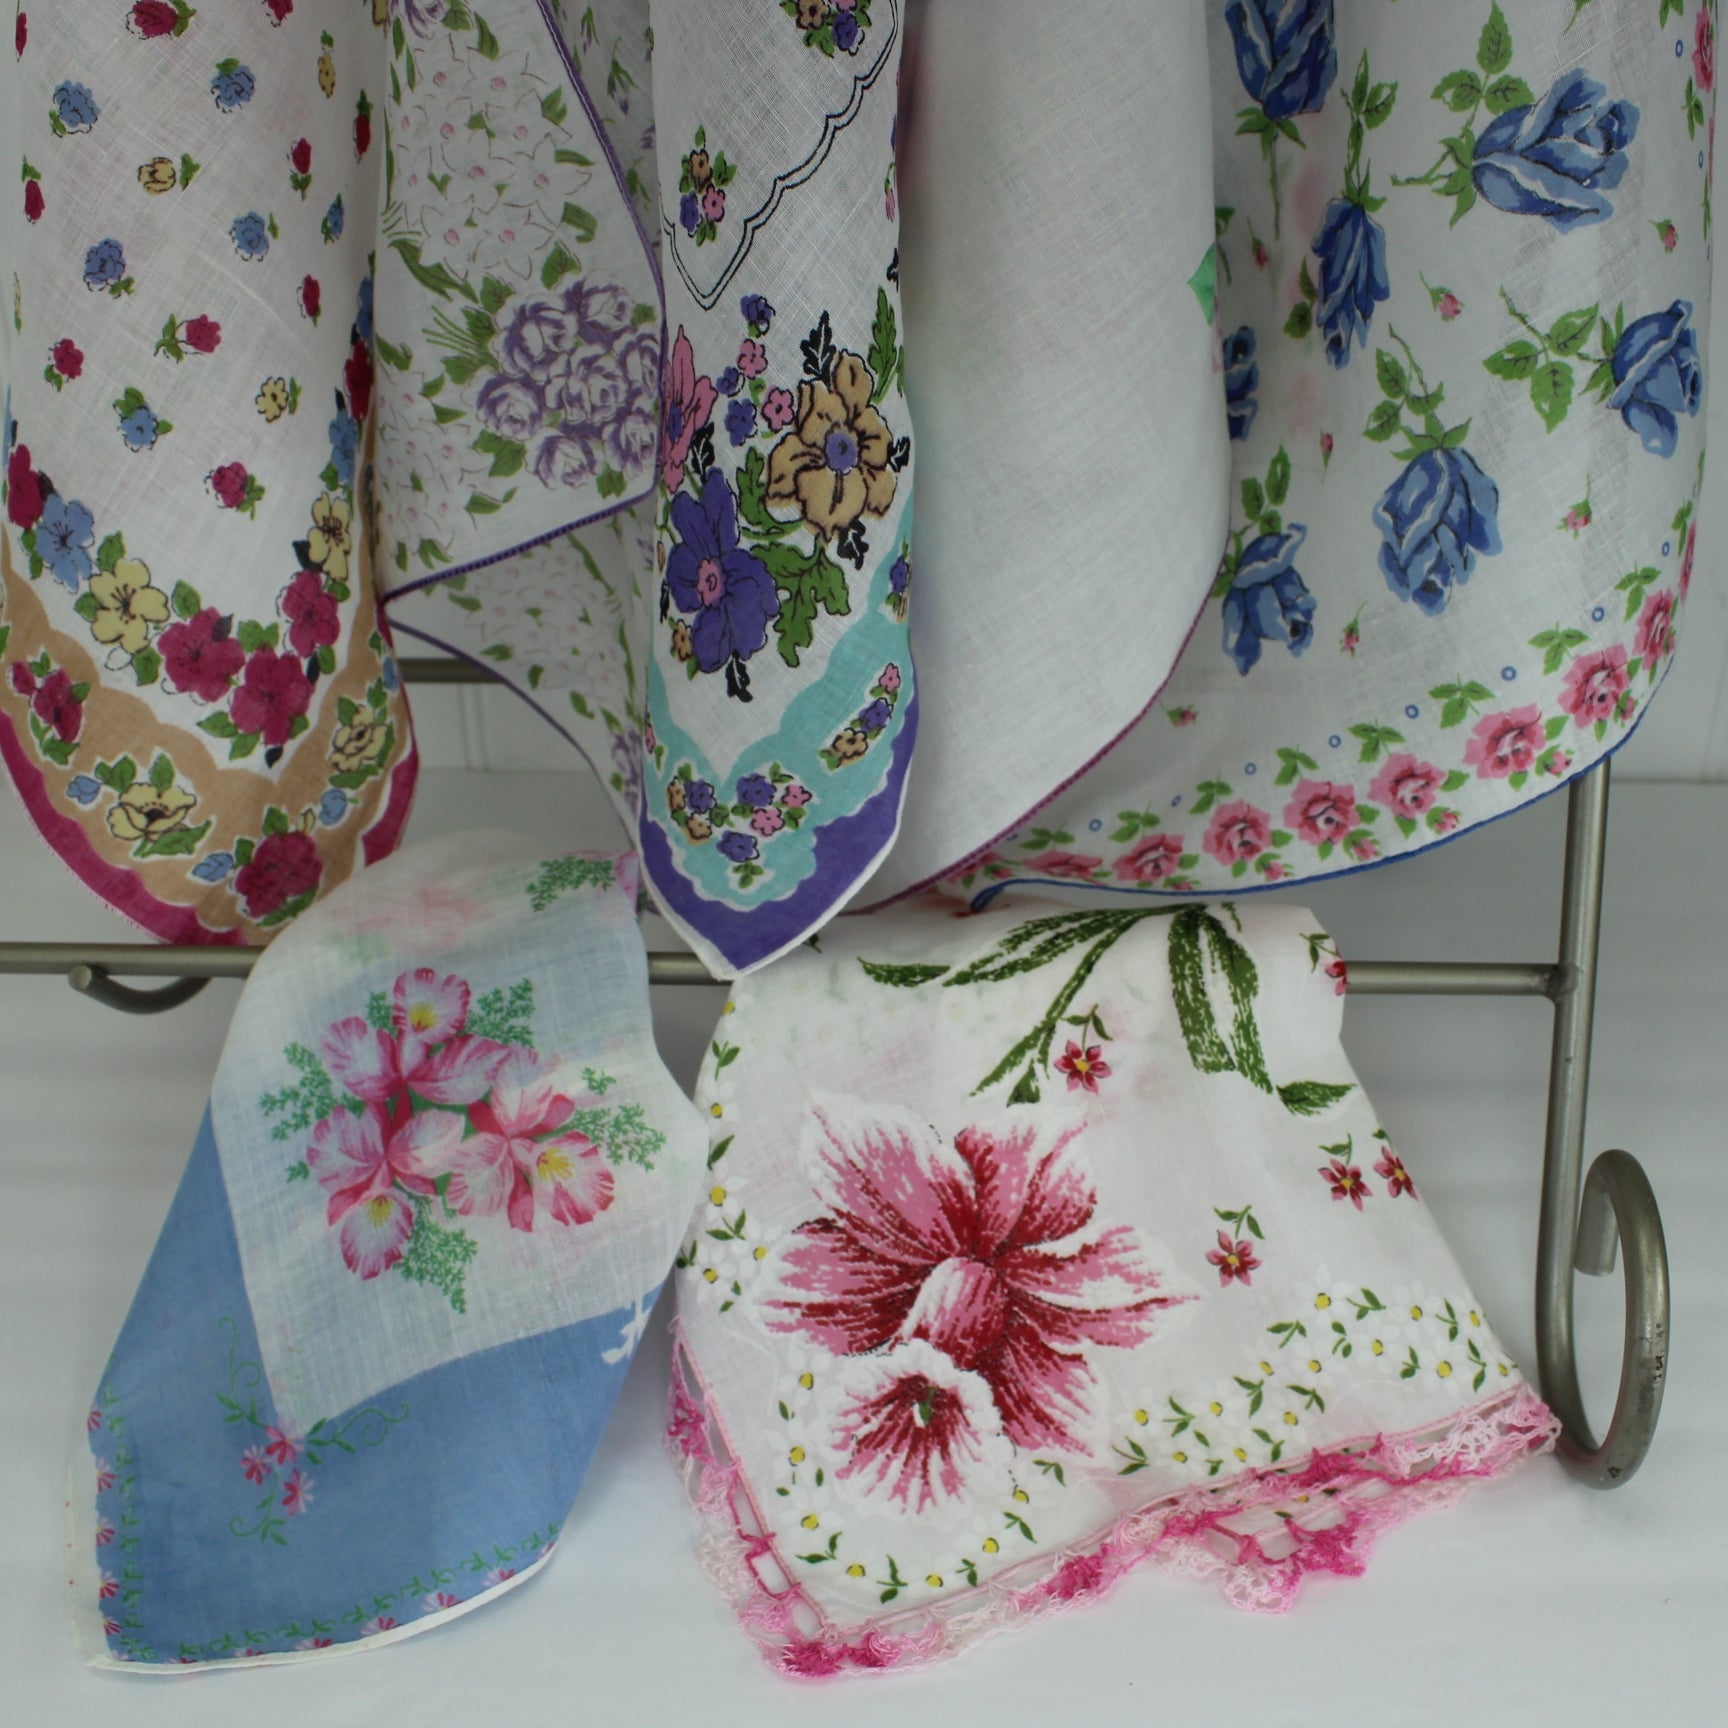 Lot 11 Handkerchiefs Floral Theme MCM Handkerchief Box DIY Clothing Crafts closeup of some hankies in lot